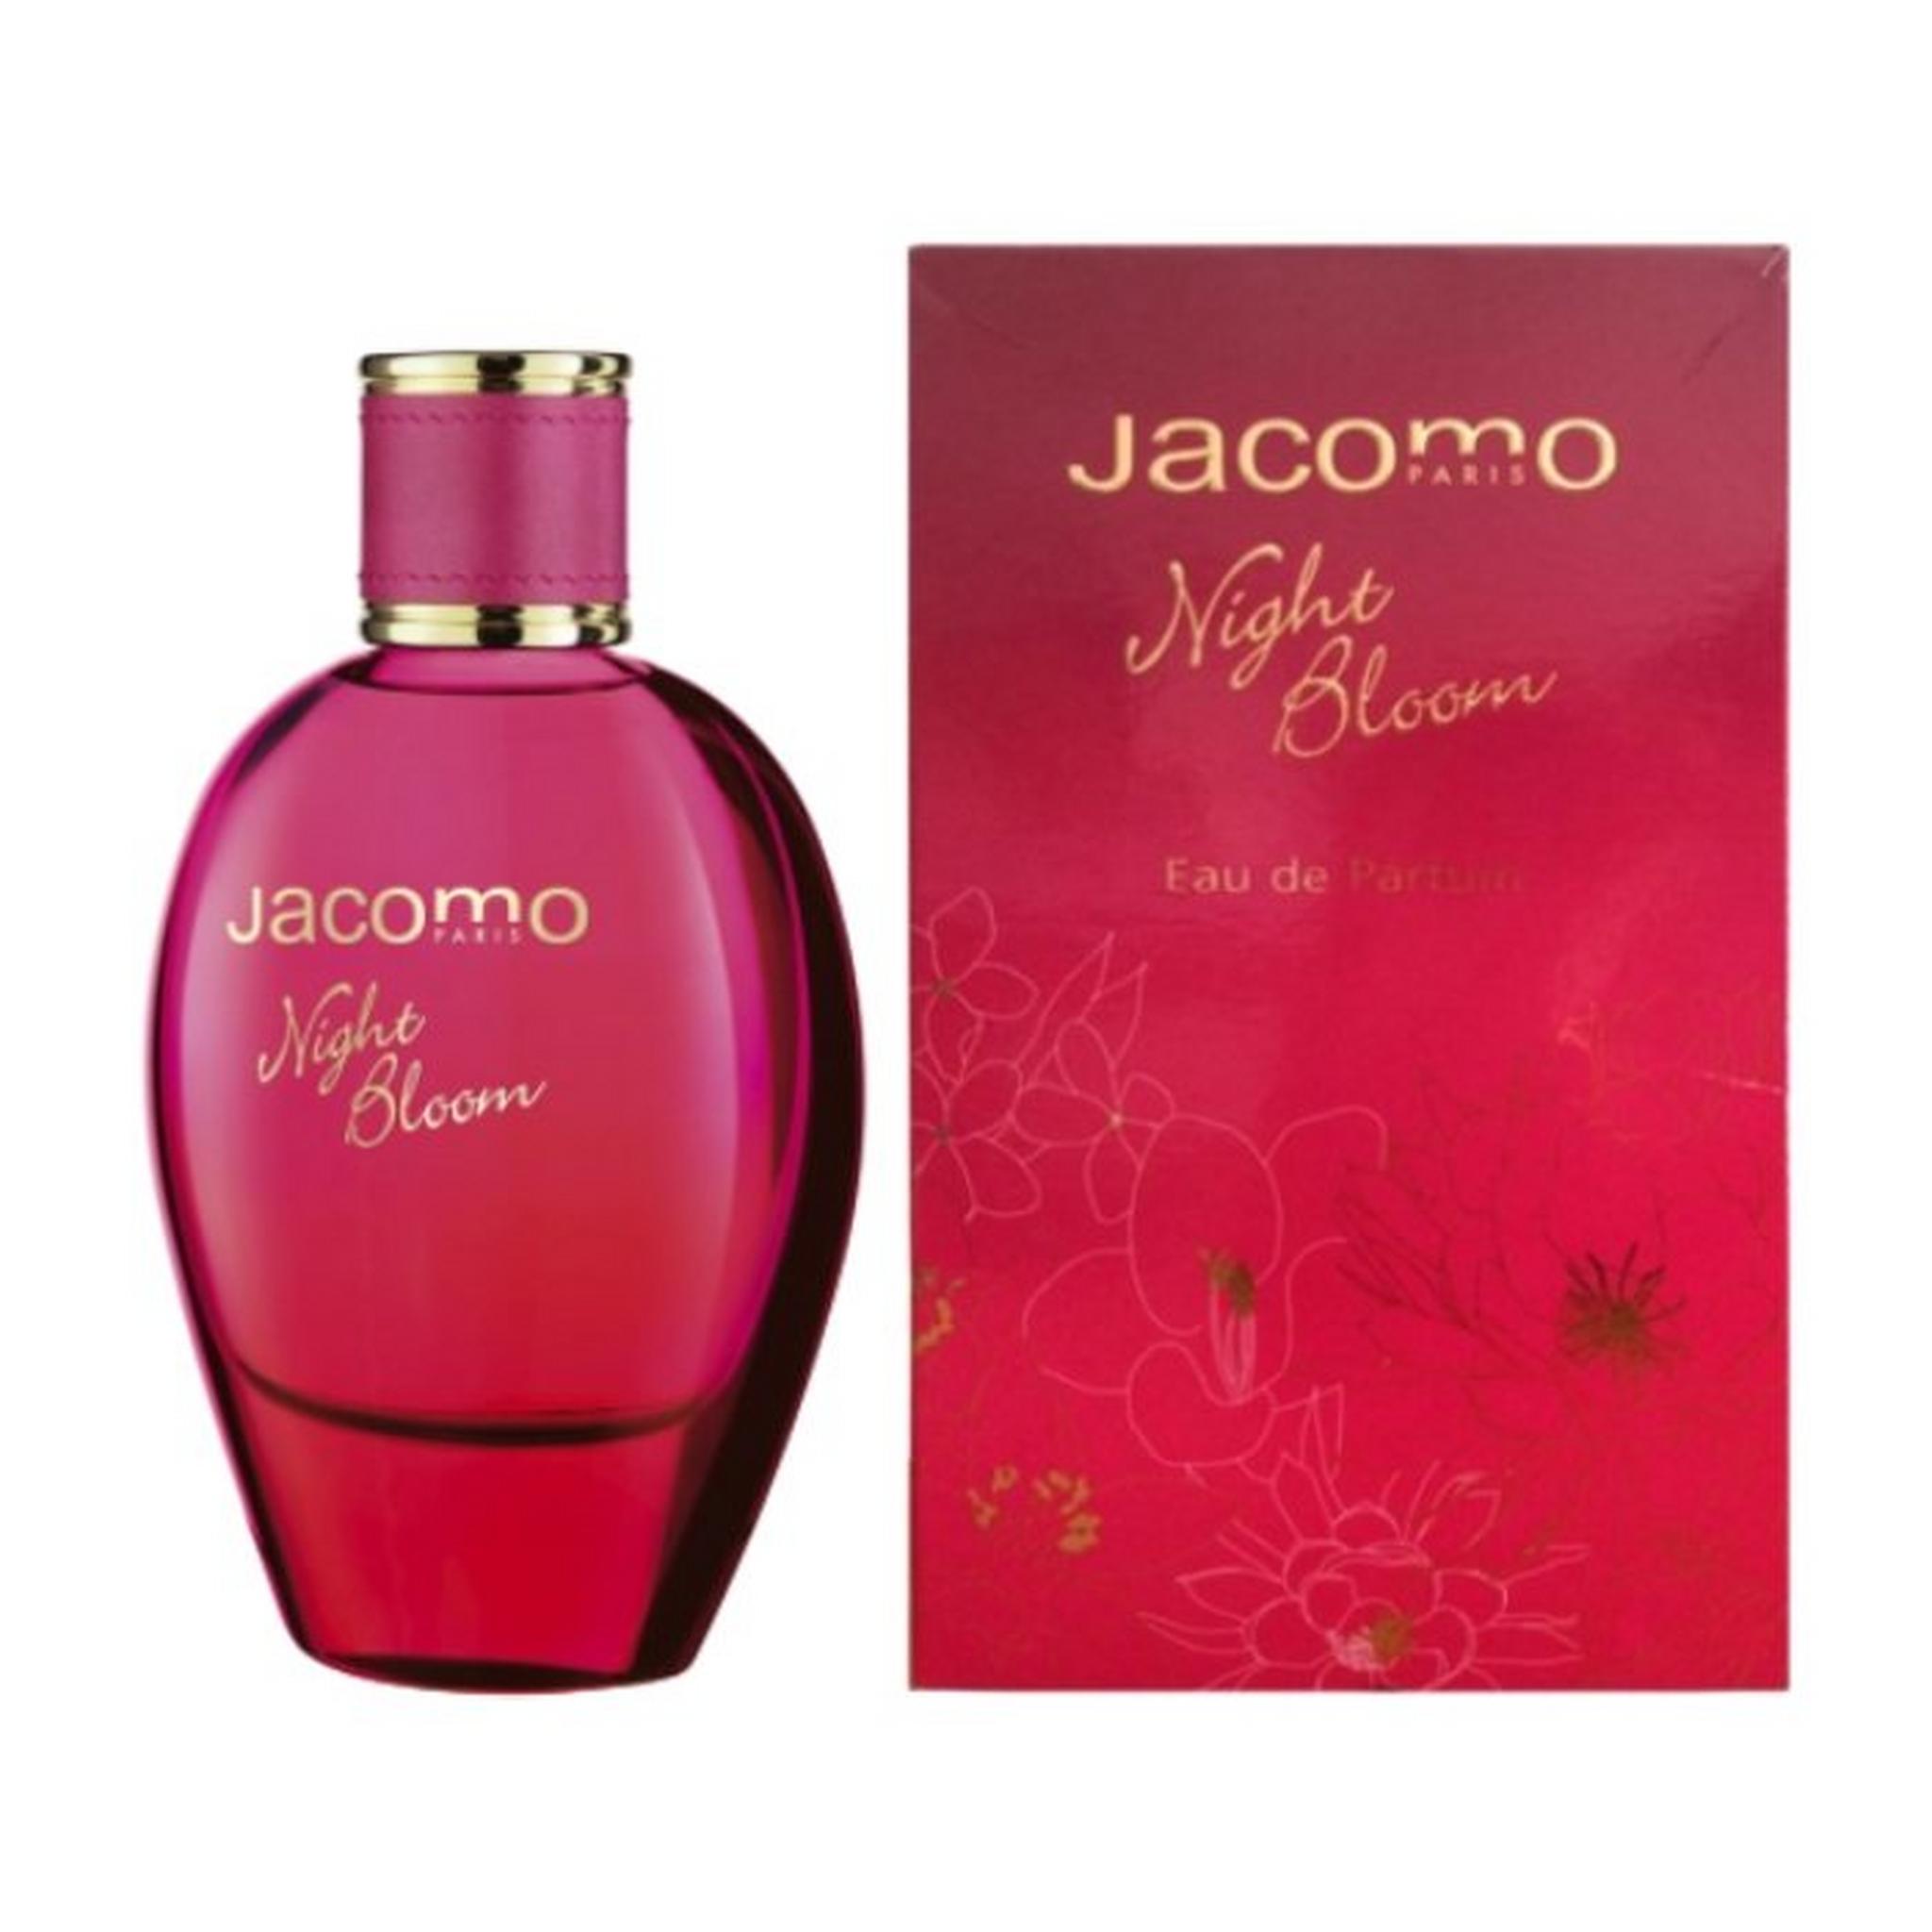 Night Bloom by Jacomo for Women Eau de Parfum 100ML.